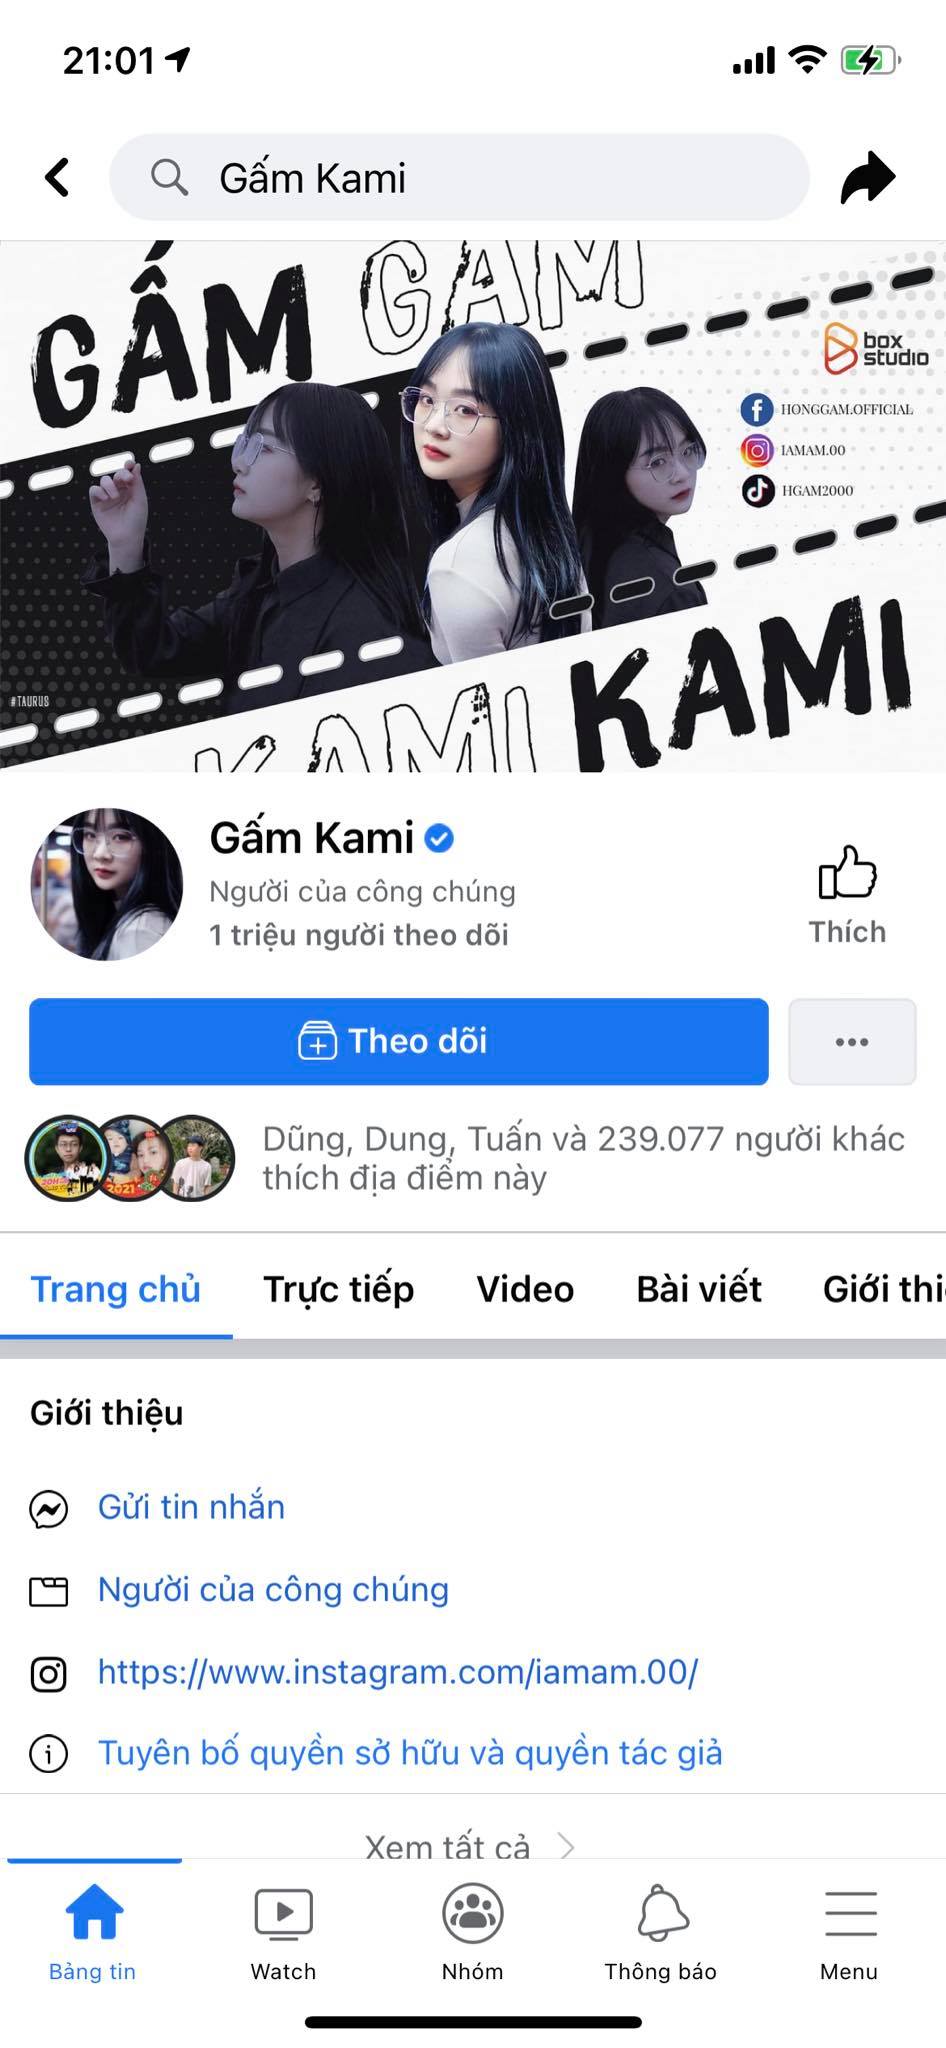 Gấm Kami cán mốc 1 triệu follow Fanpage